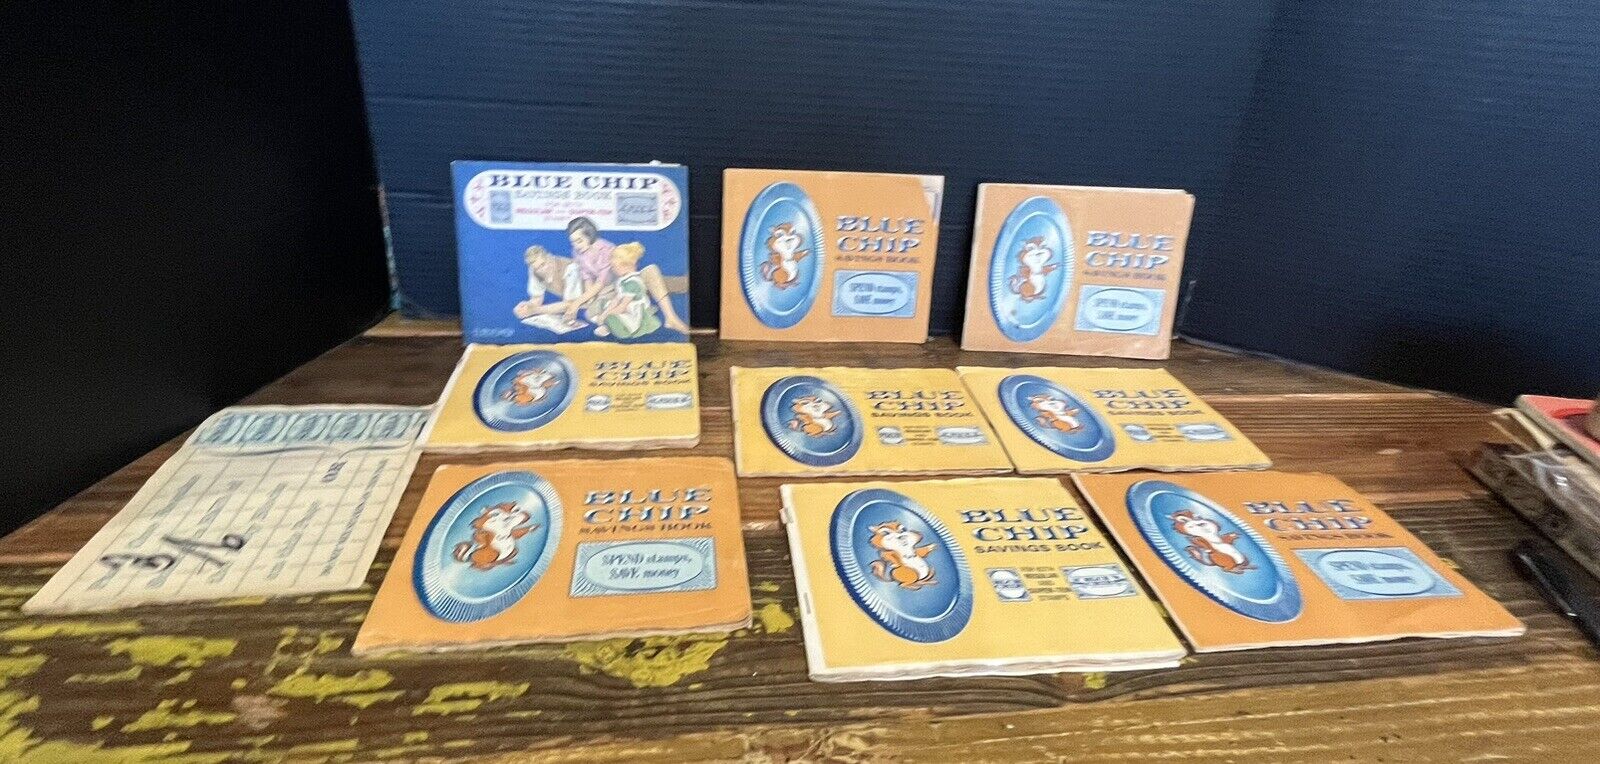 Lot of 9 Vintage Blue Chip Stamp Savings Books